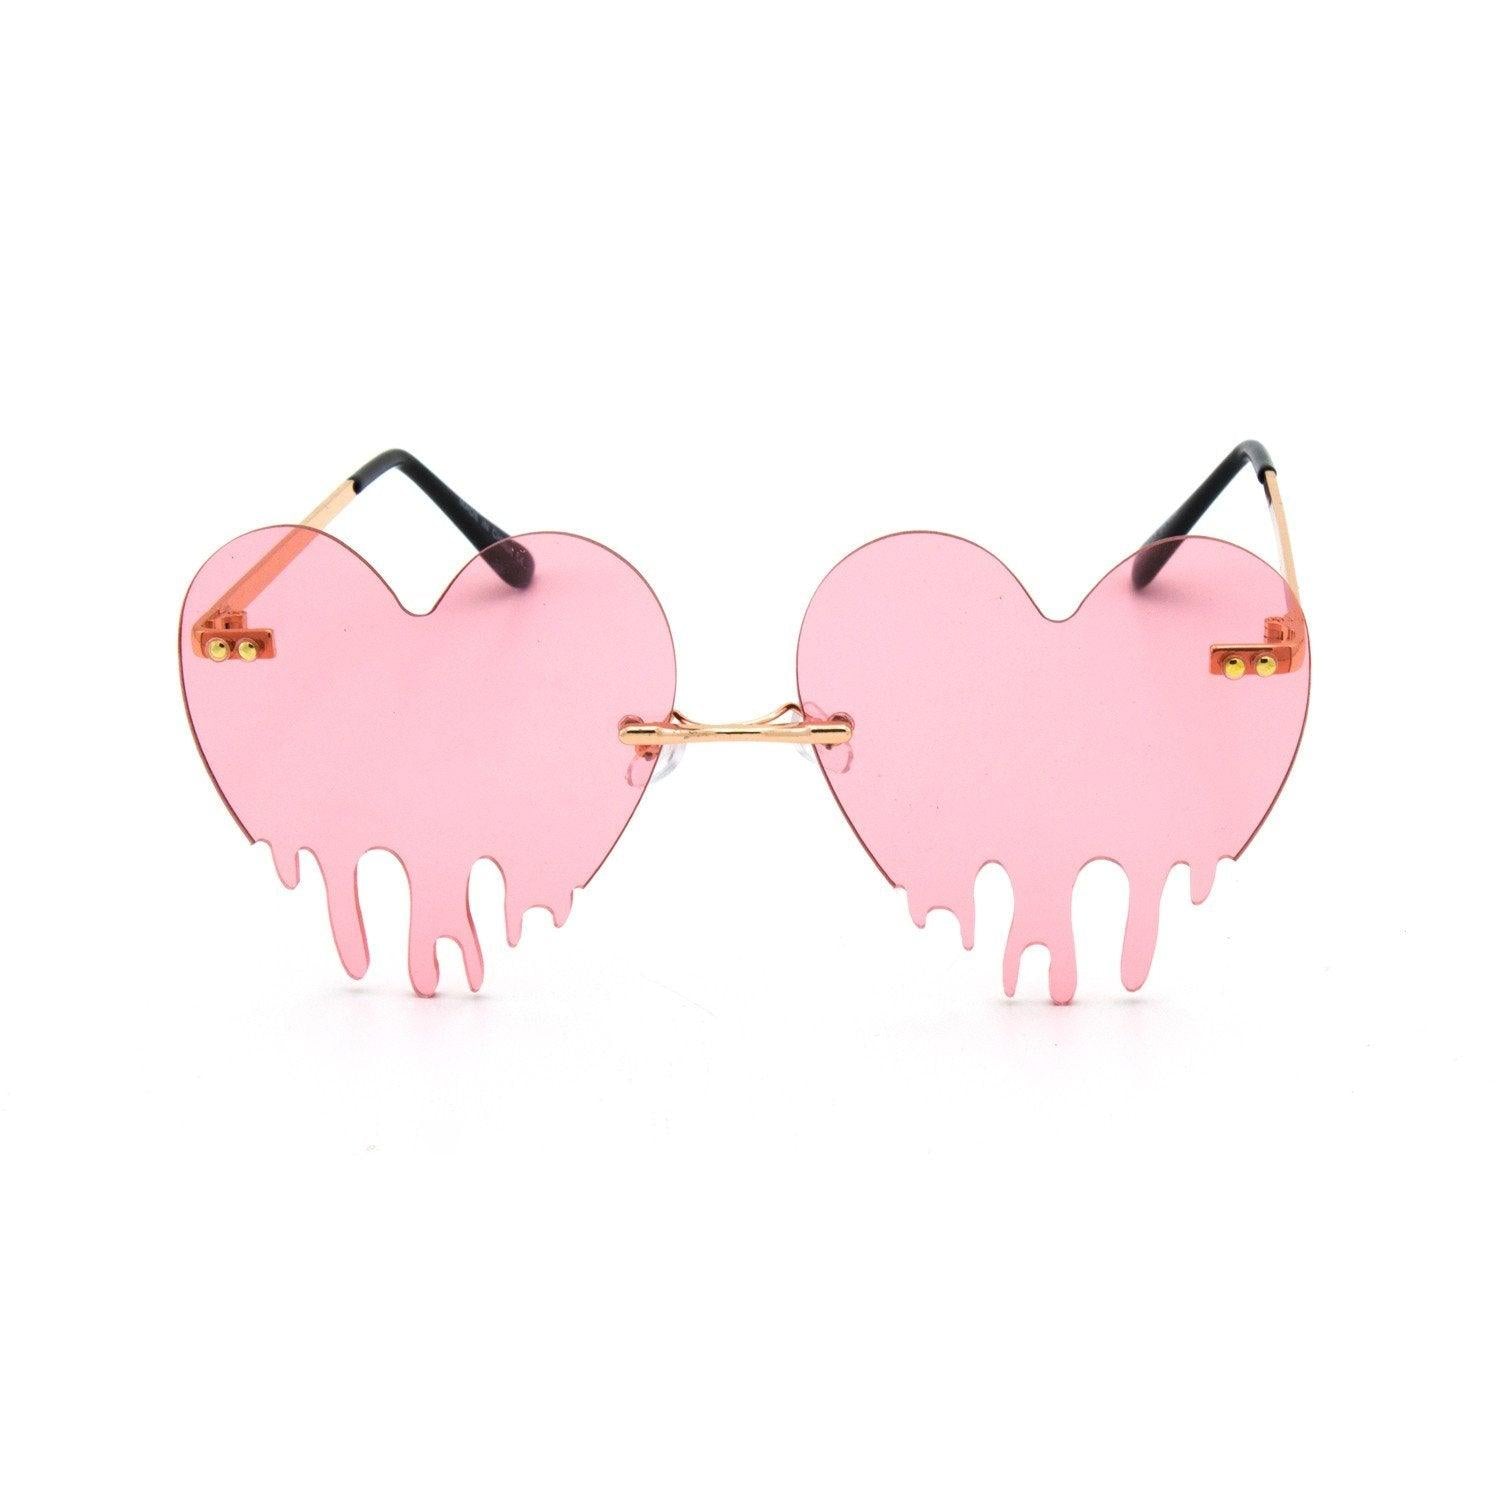 "Melting Heart" Plastic Sunglasses - Weekend Shade Sunglasses